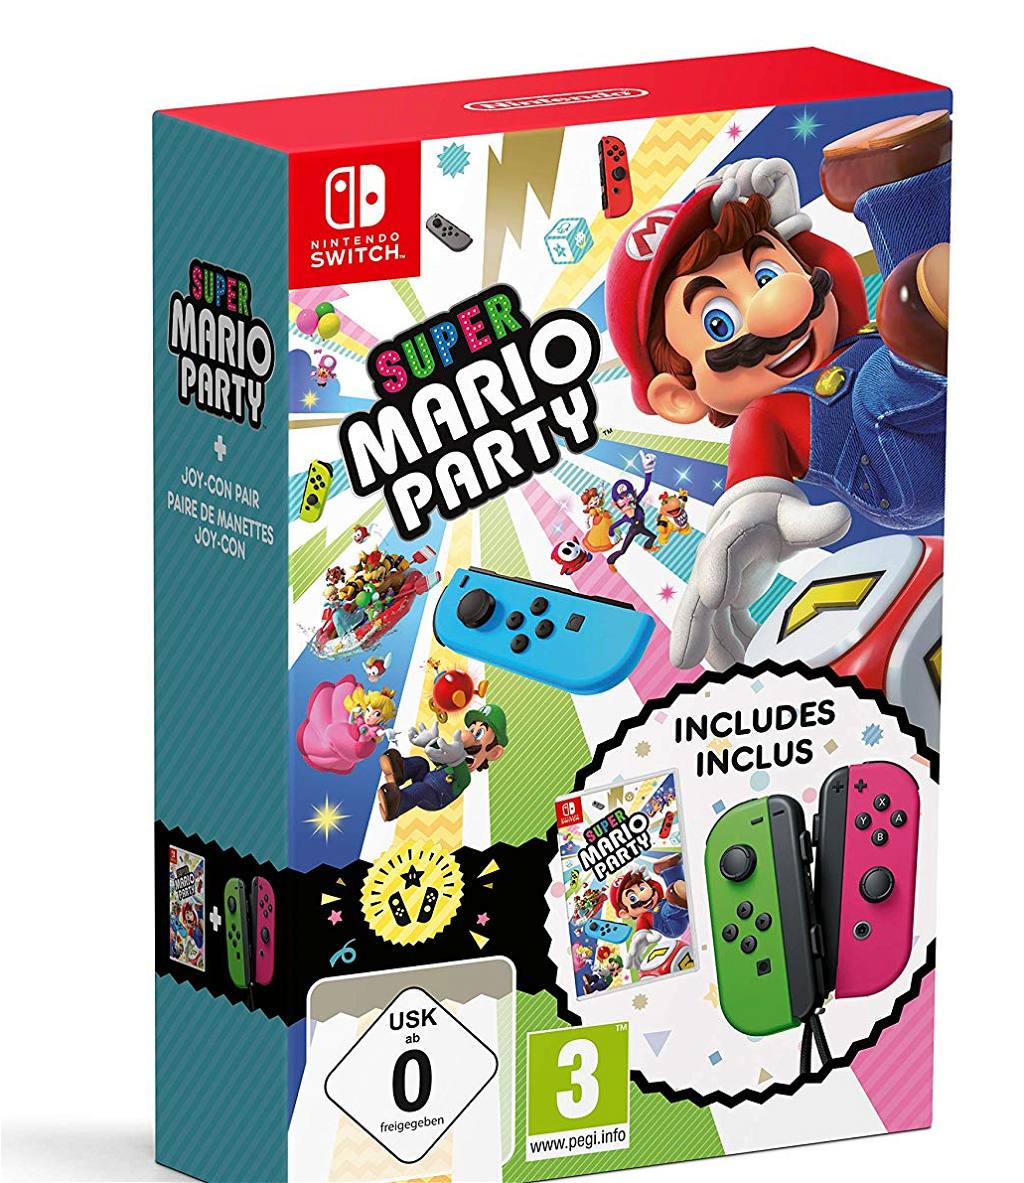 Skære af Formen Brandy Super Mario Party Joy-Con Bundle (Neon Green / Neon Pink) [Limited Edition]  for Nintendo Switch